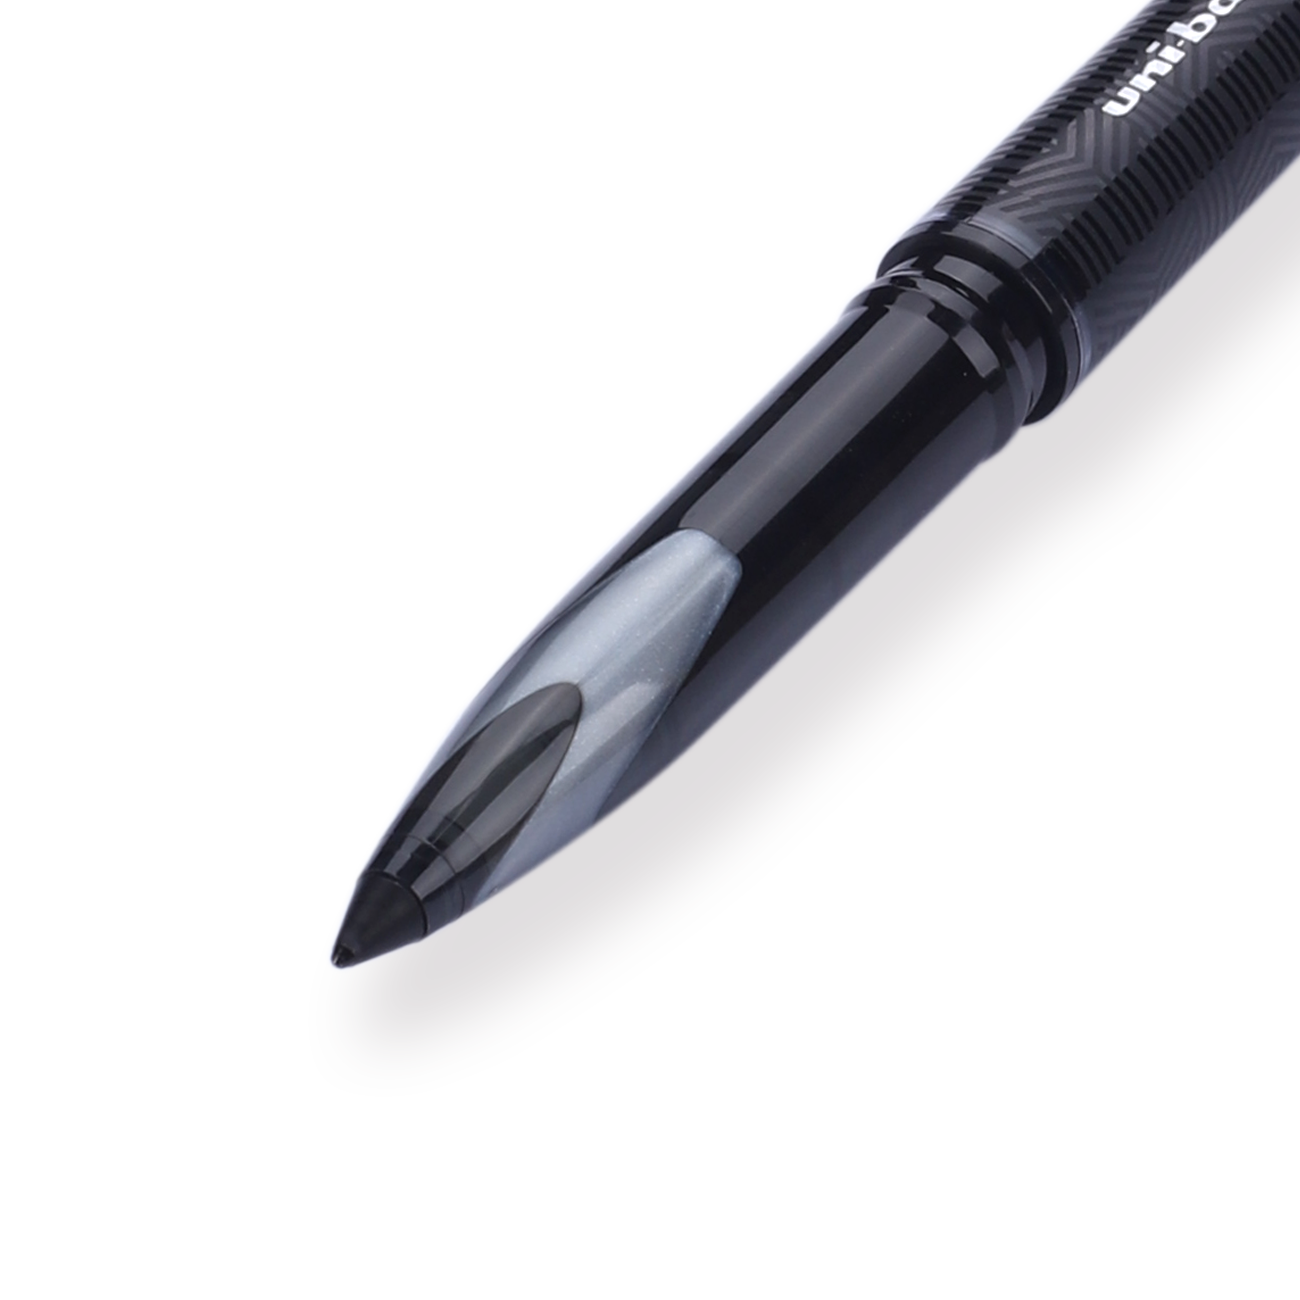 Uniball Black Pen